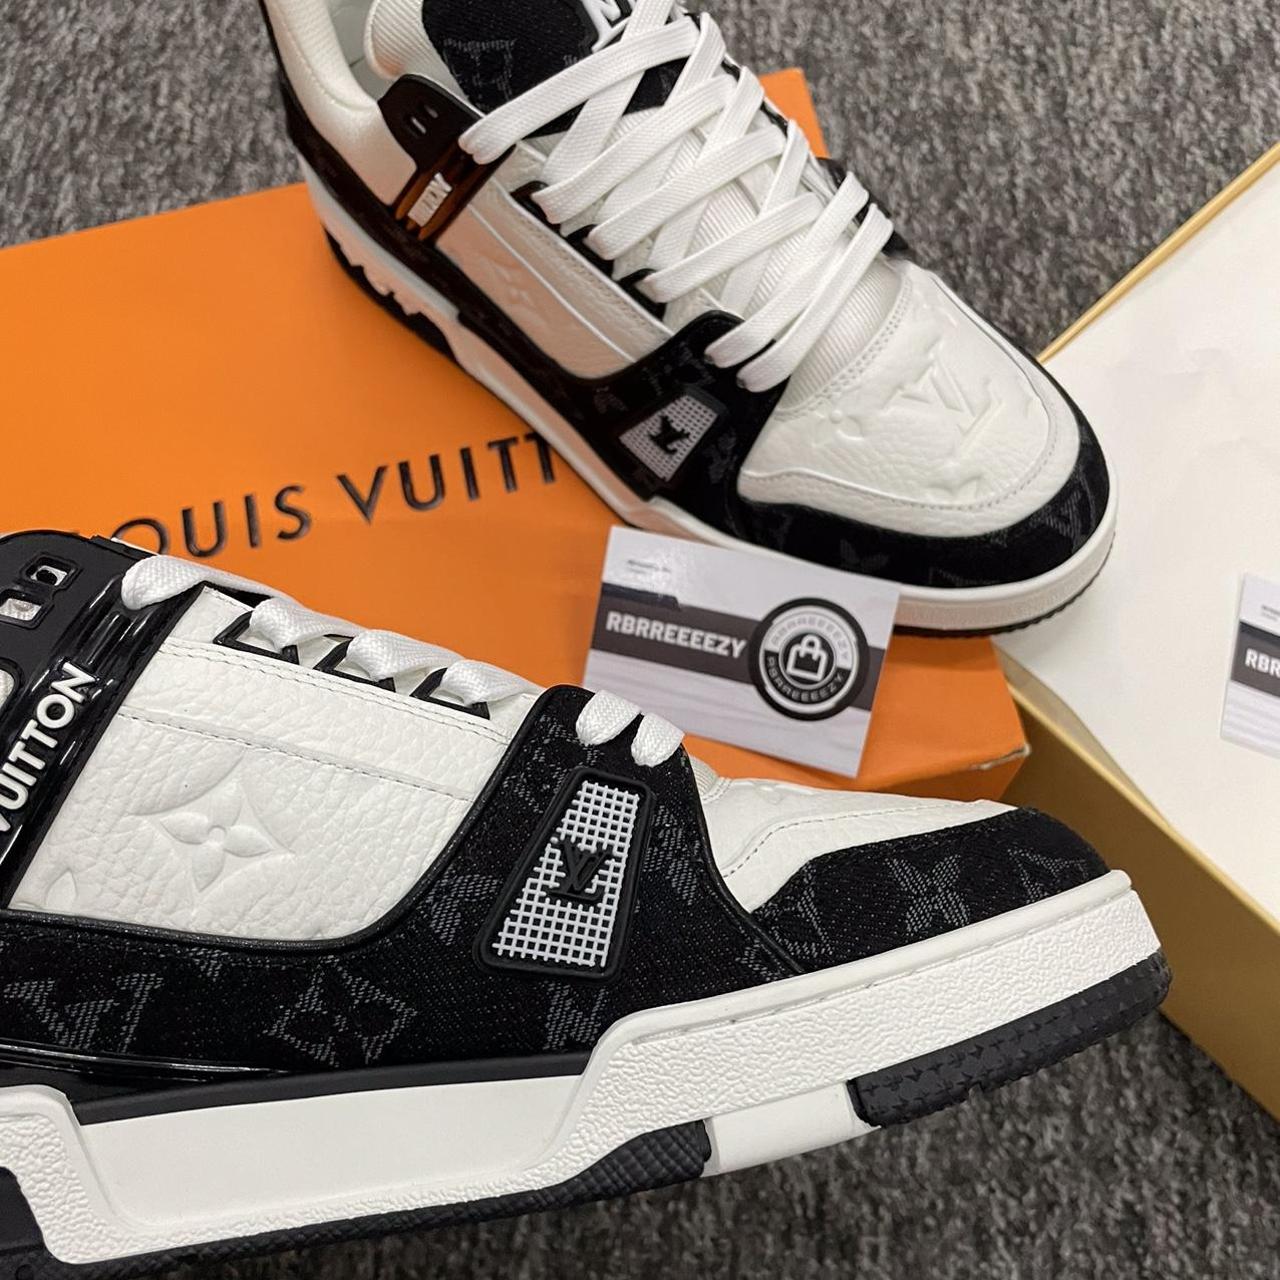 Louis Vuitton LV Trainer Maxi Sneaker Orange - Depop